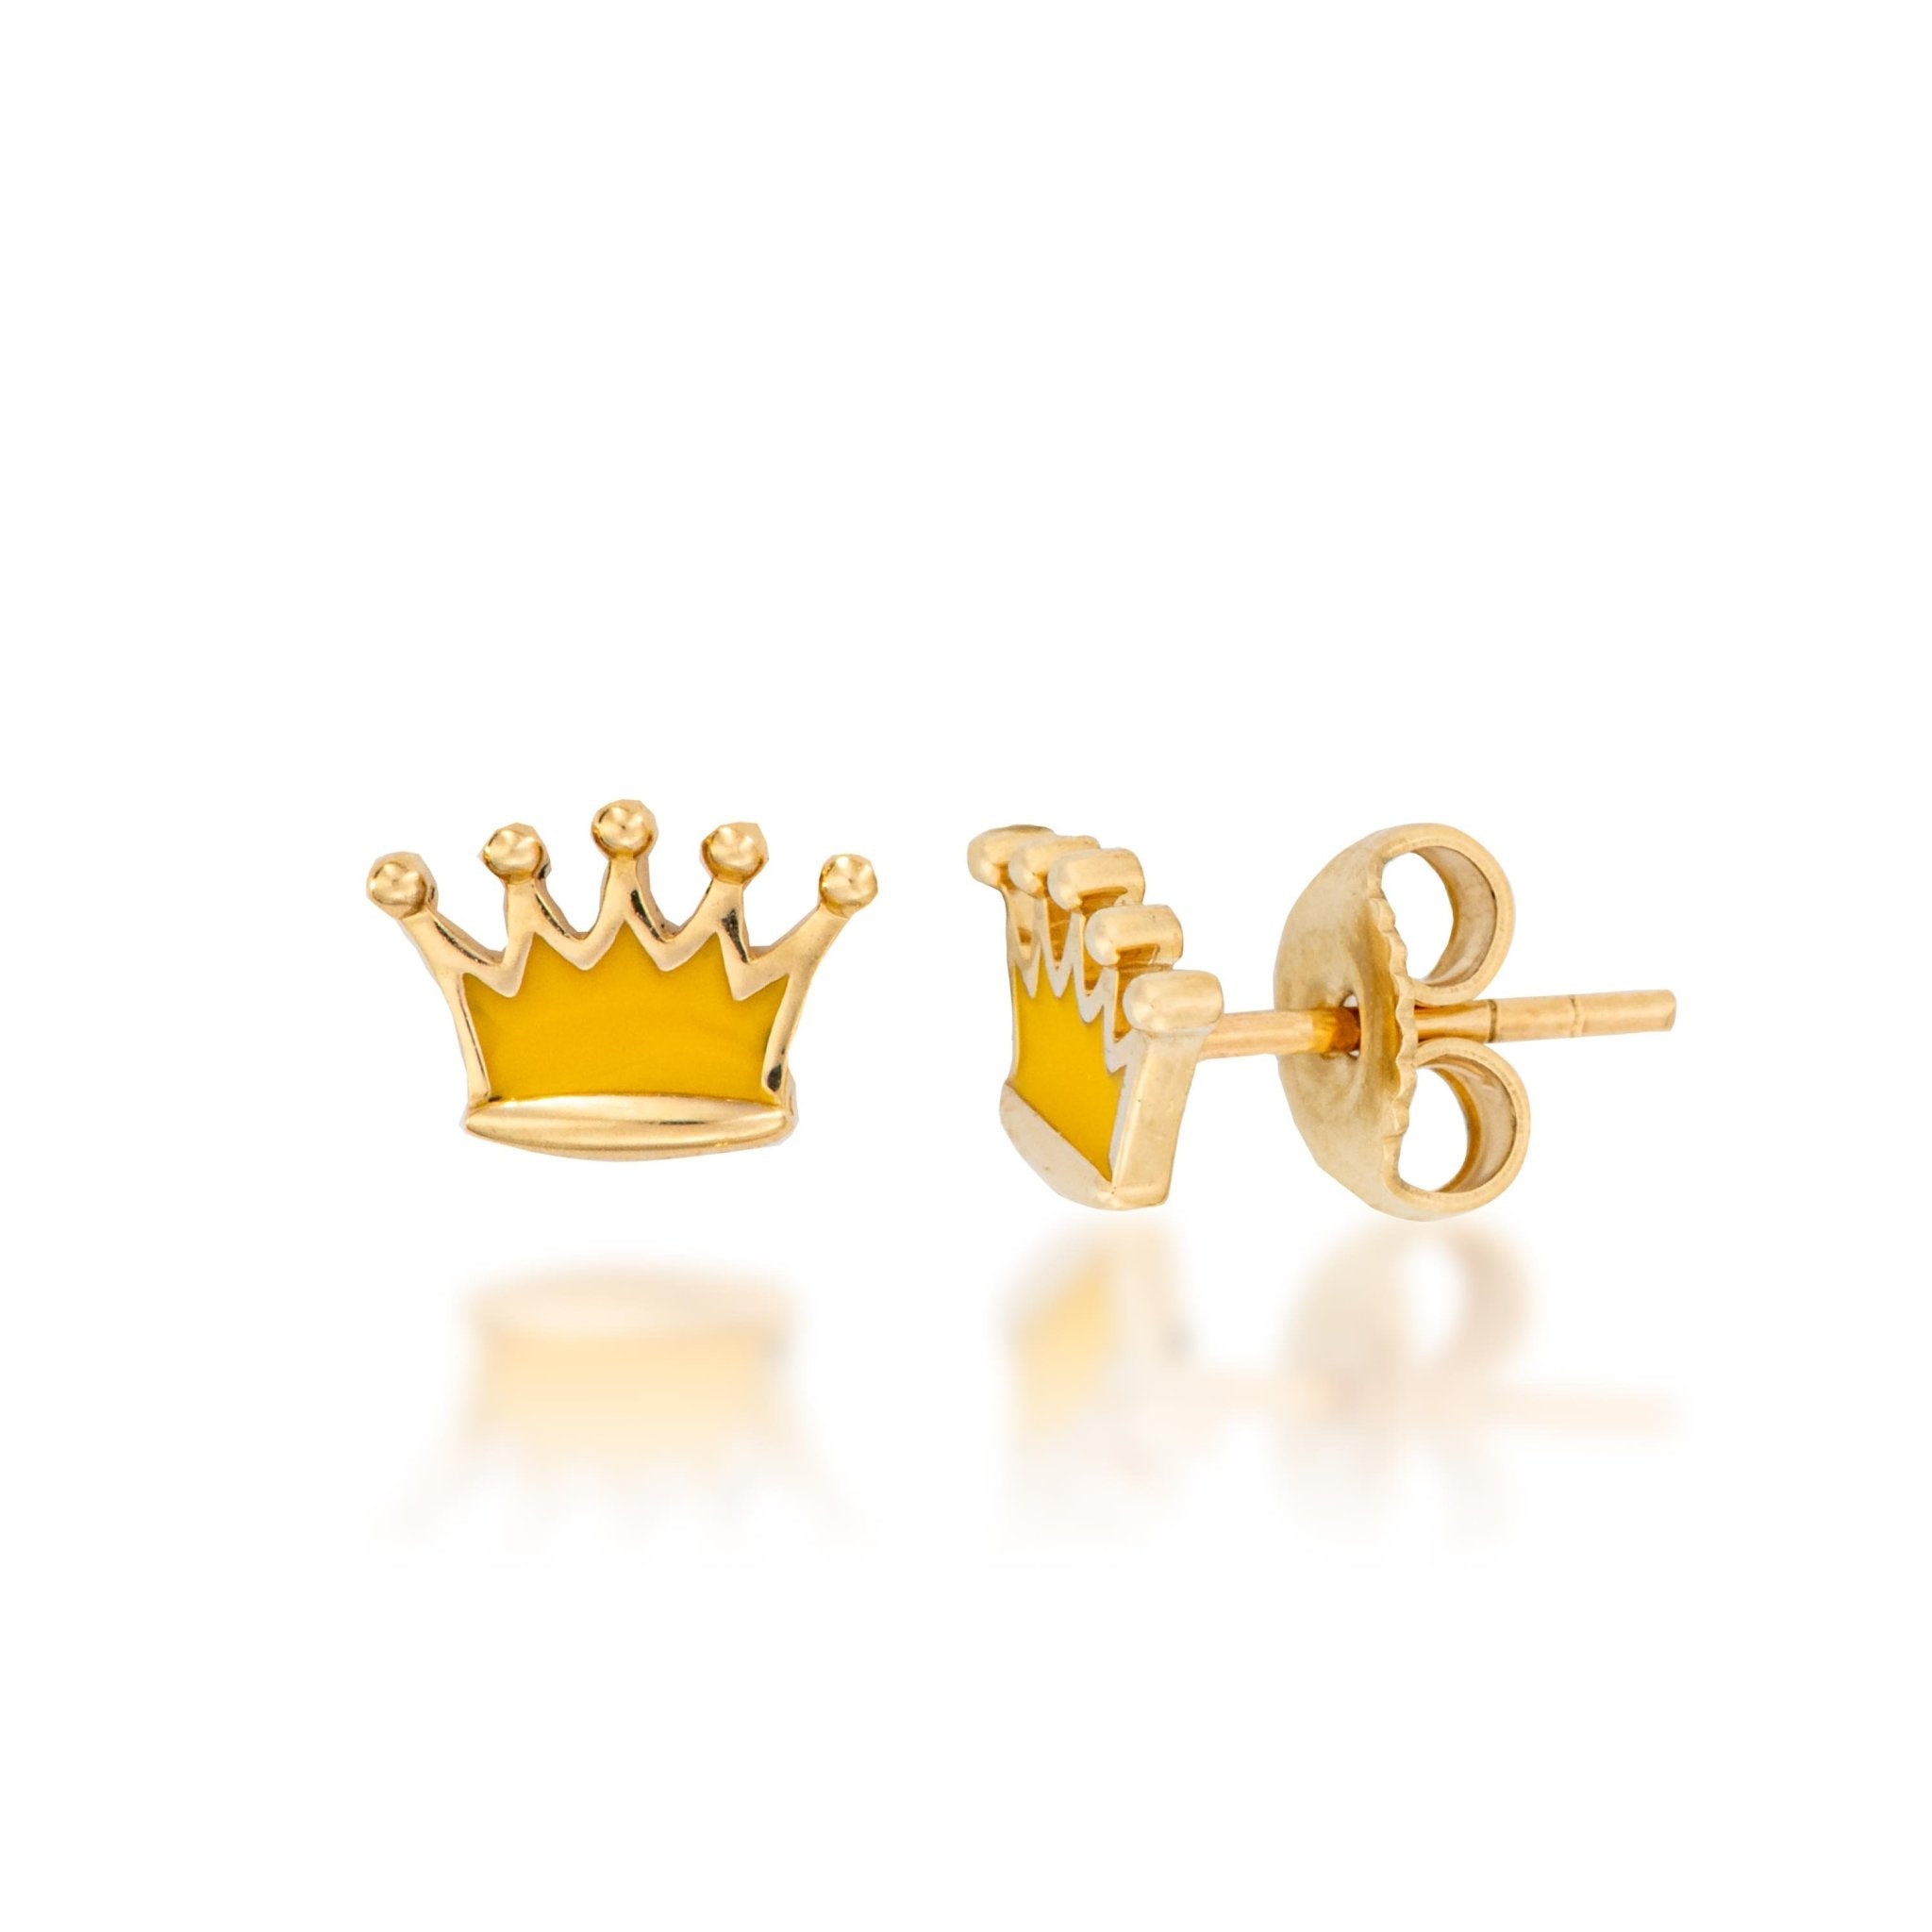 Crown Earring Studs - Alexis Jae Jewelry